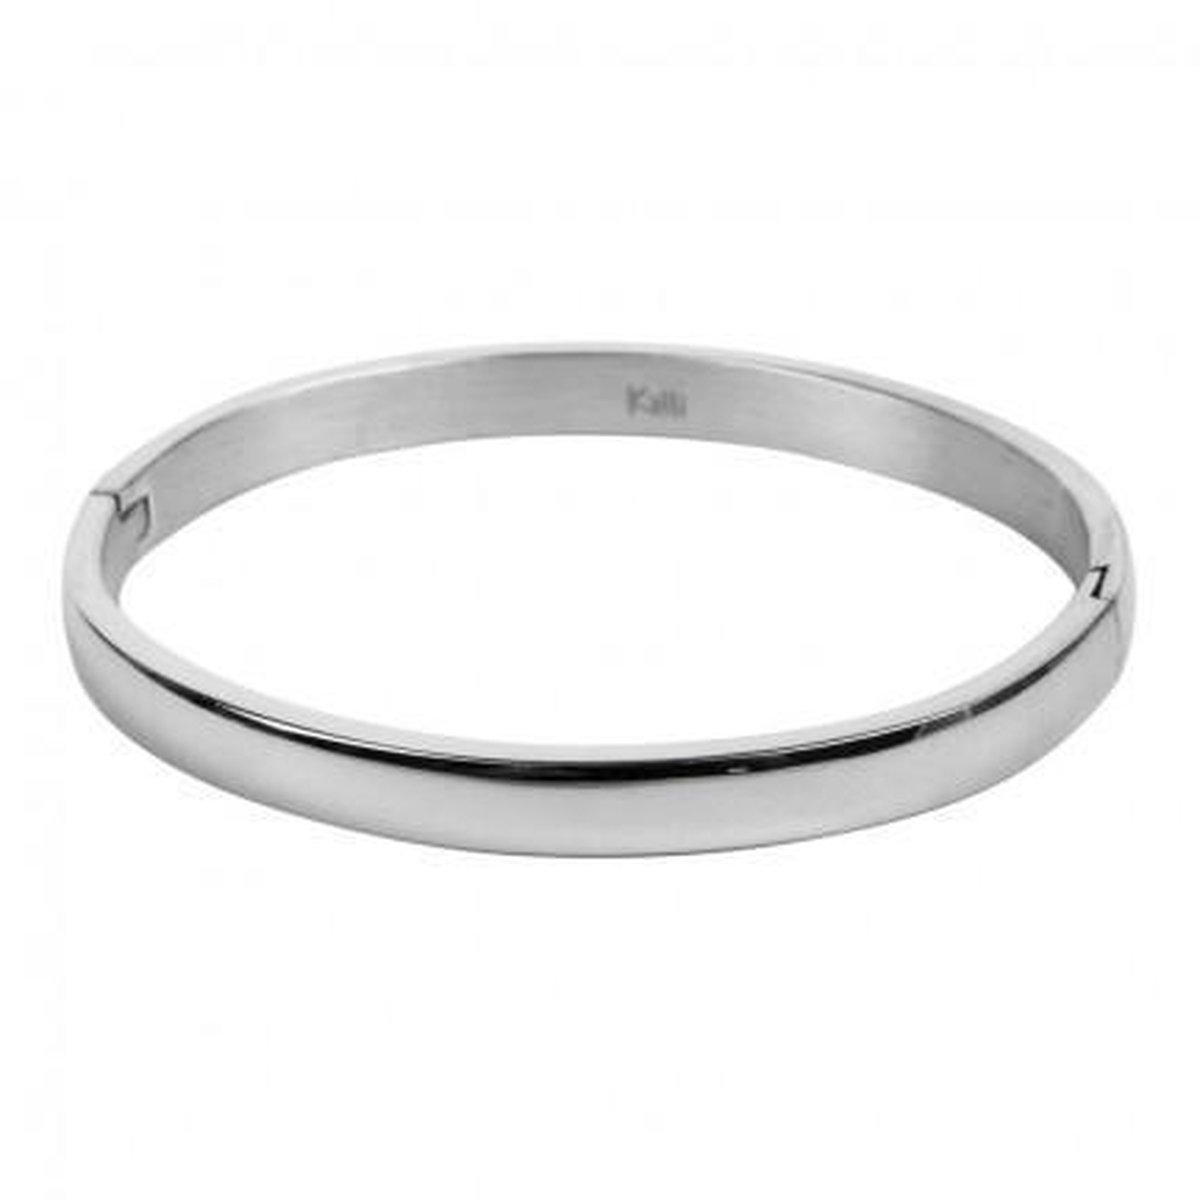 kalli-bangle-armband-2119-zilver